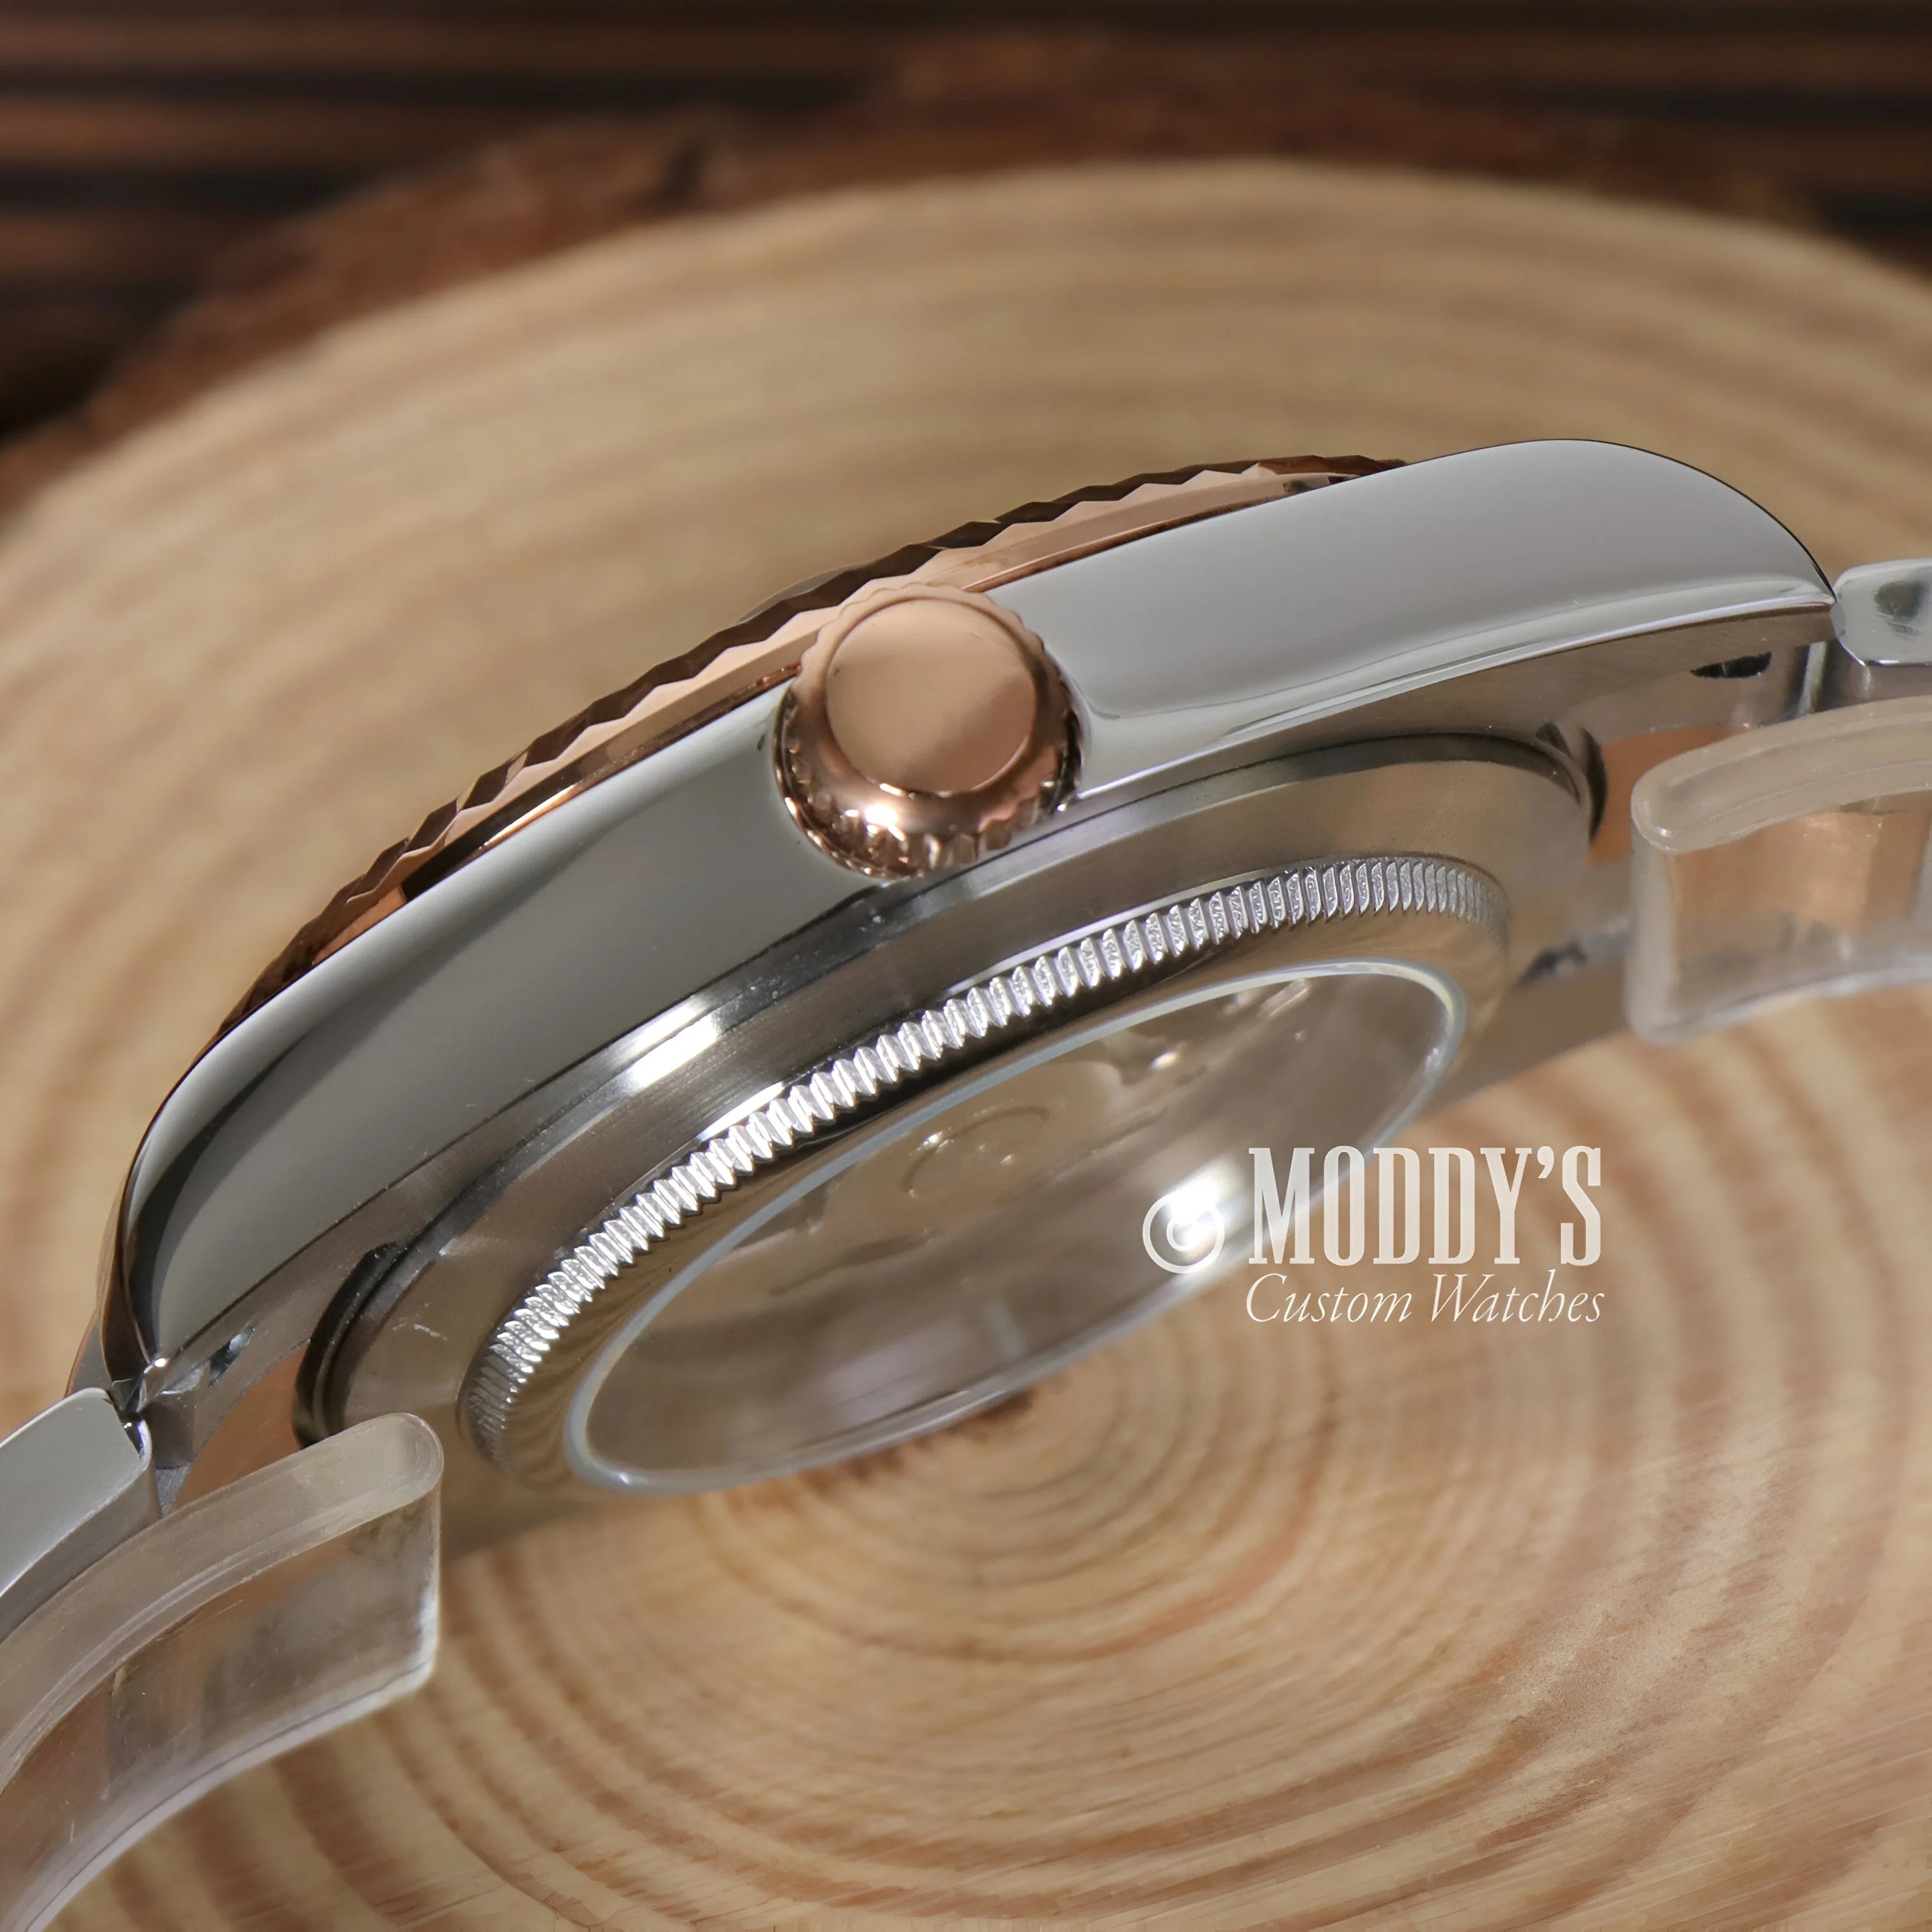 Luxury Seiko Mod Wristwatch, Silver Case, Rose Gold Crown, Branded Moddy’s Custom Watches